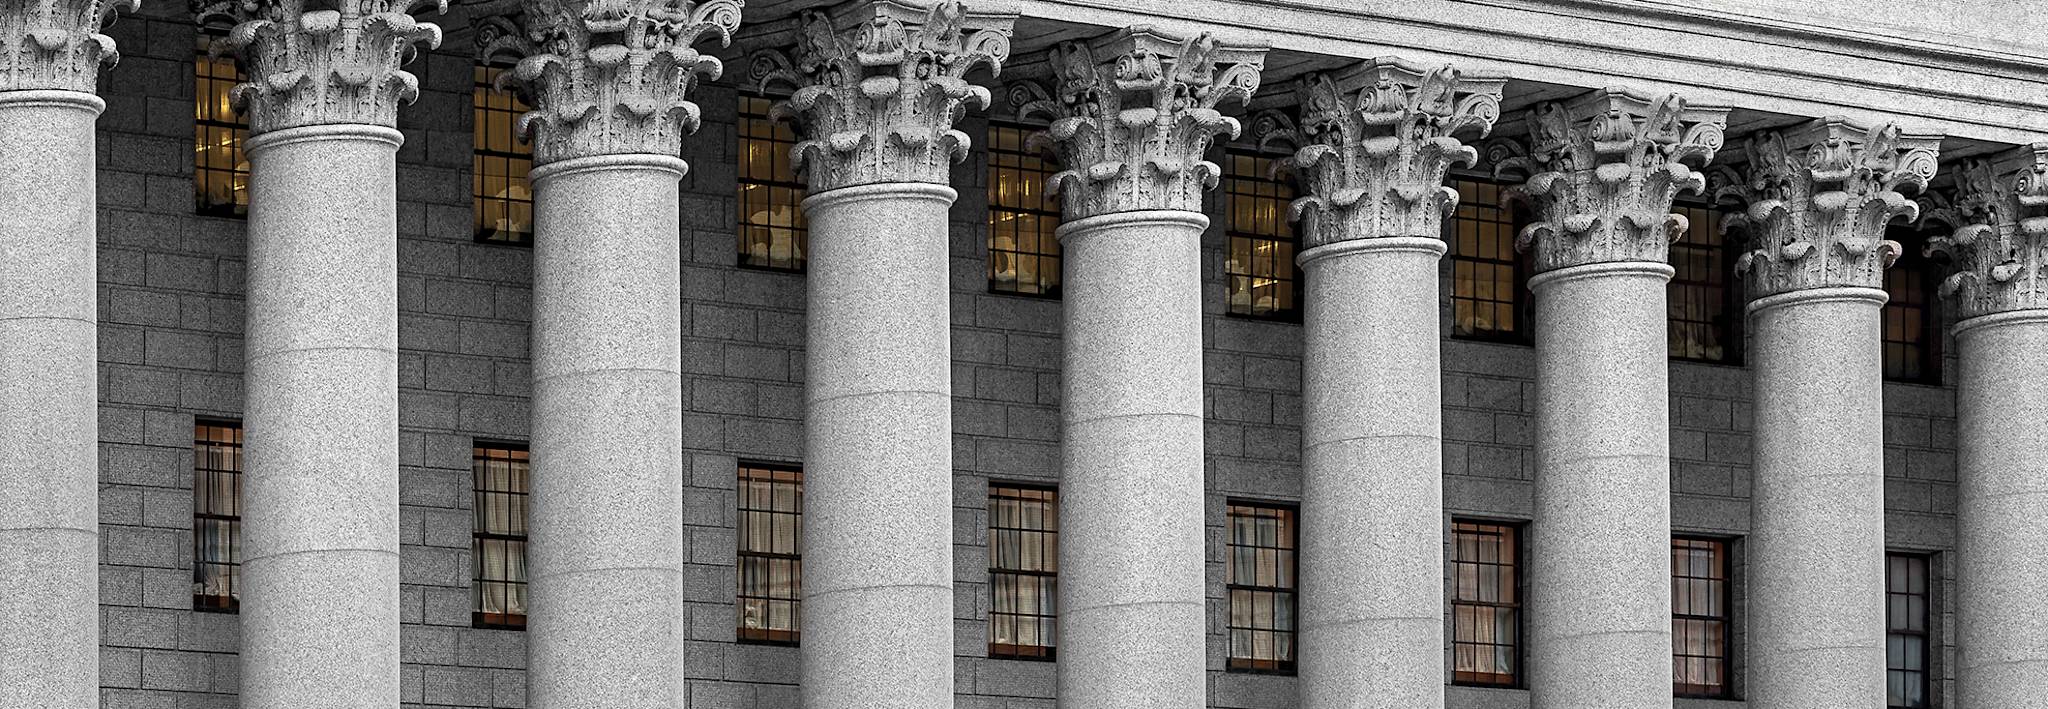 Courthouse pillars. 